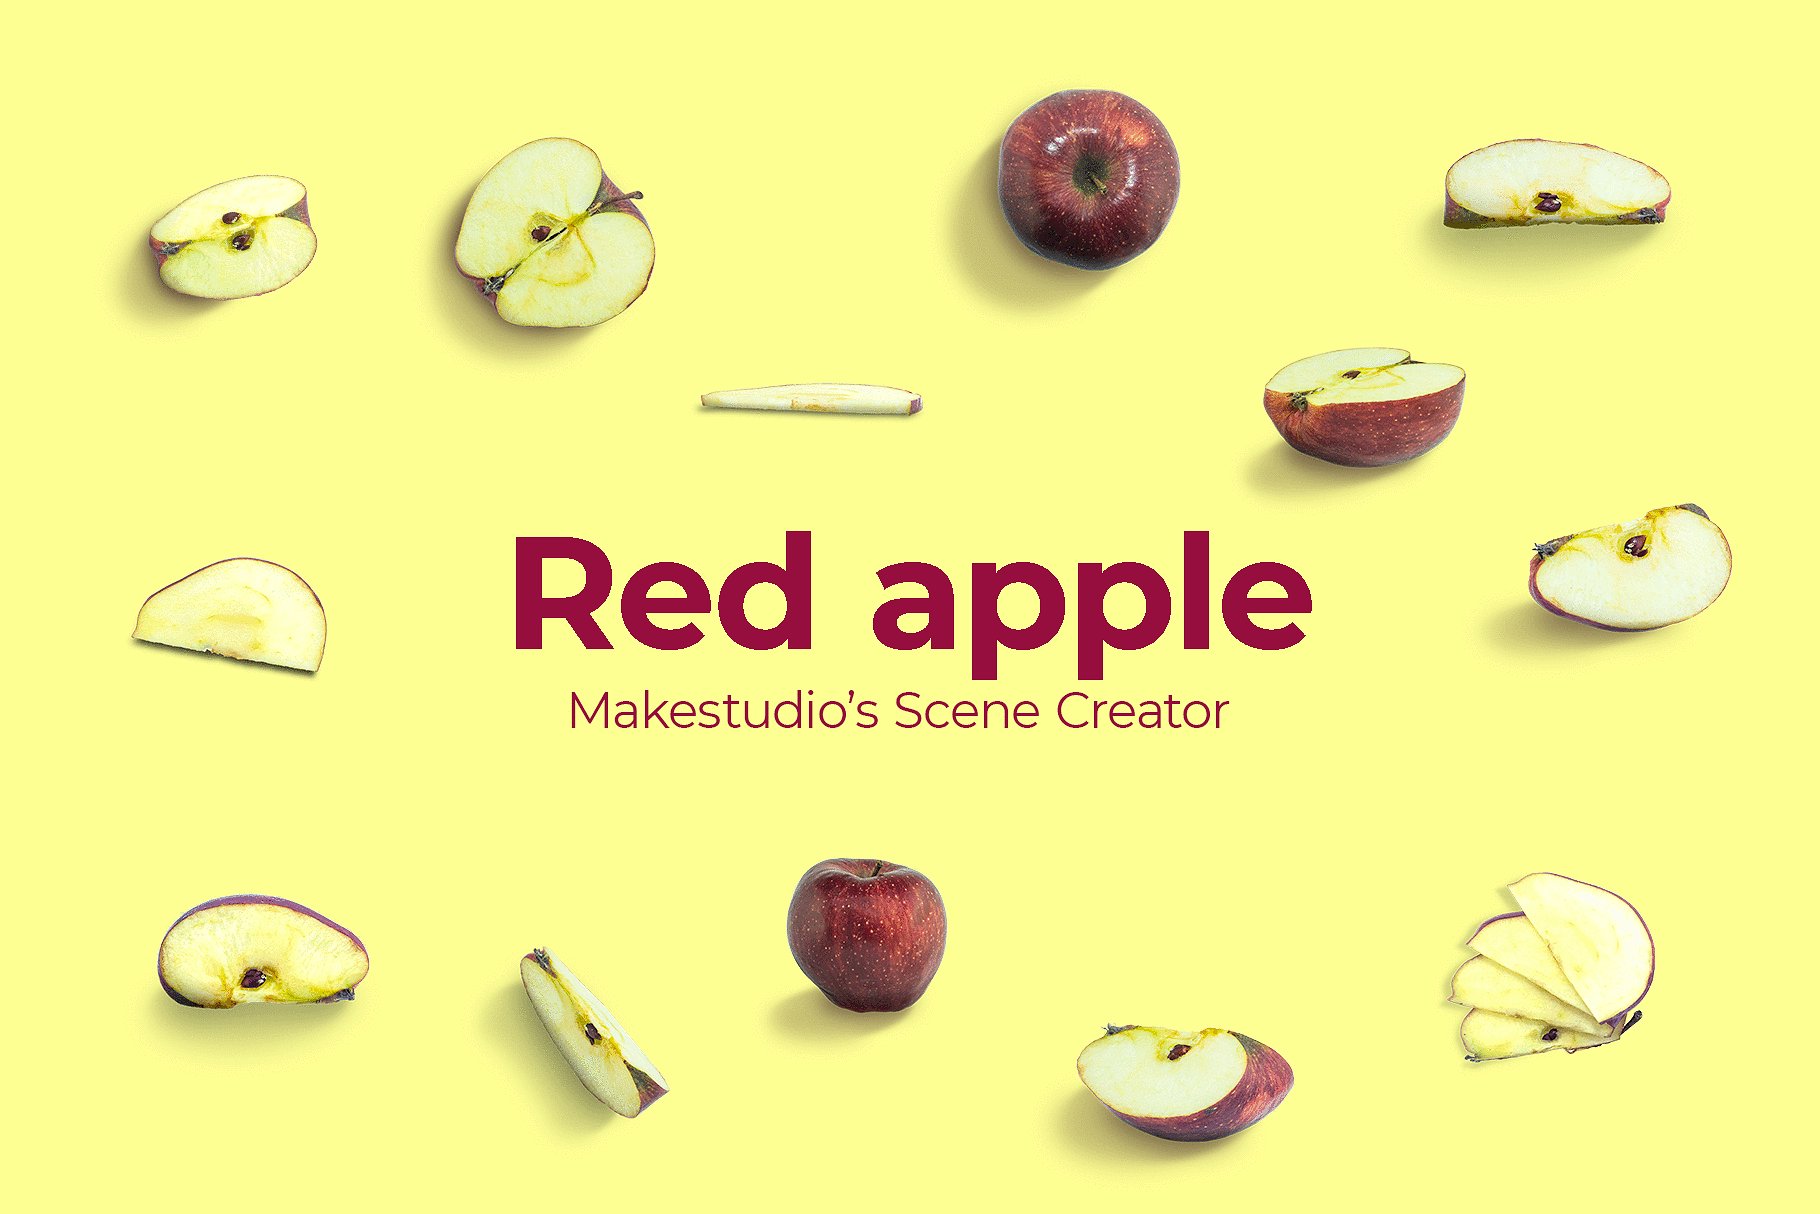 Red apple - Scene creator cover image.